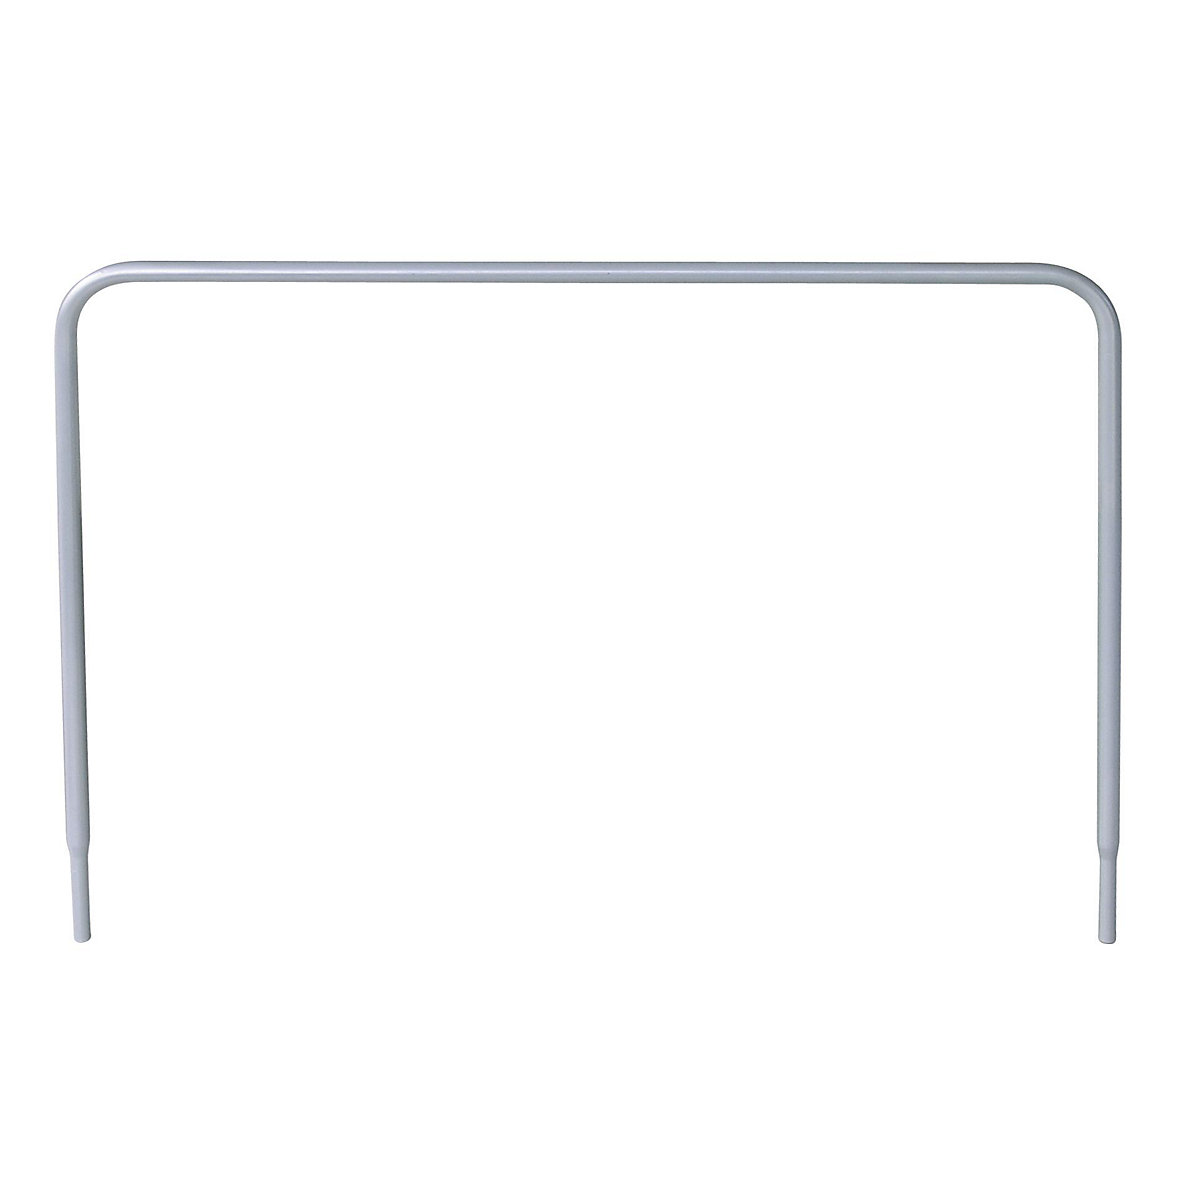 Shelf divider for C-rails – SCHULTE, length 500 mm, height 500 mm-1